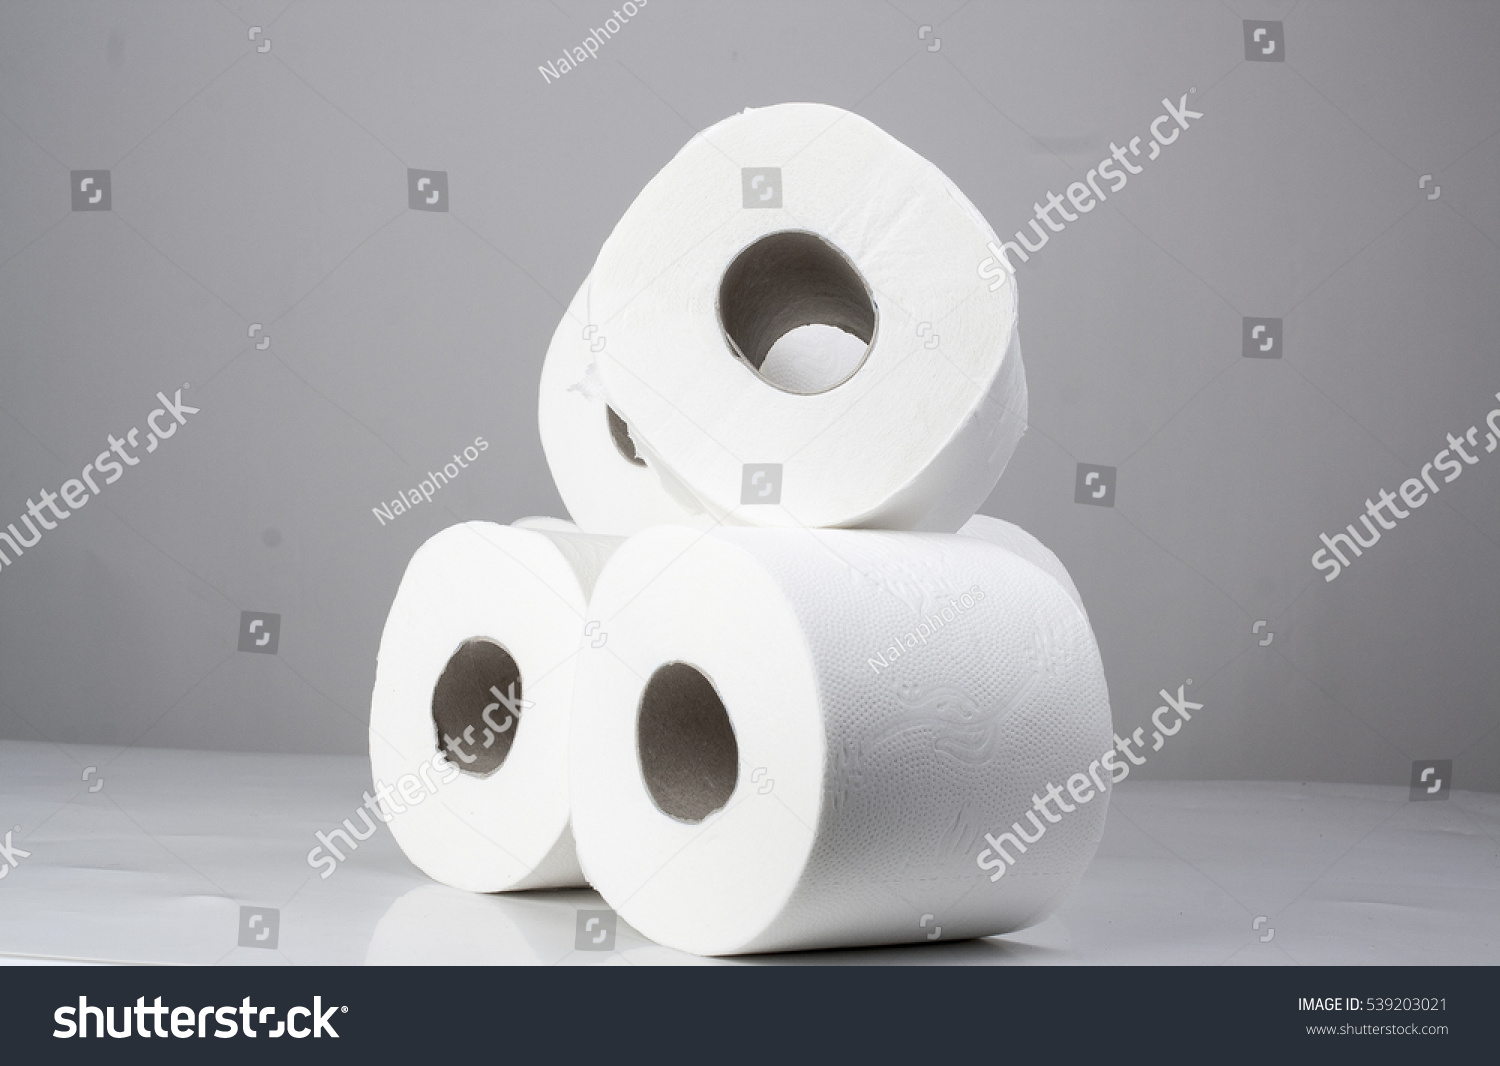 Toilet Papertissue Paper Roll Reel Toilet Stock Photo 539203021 ...